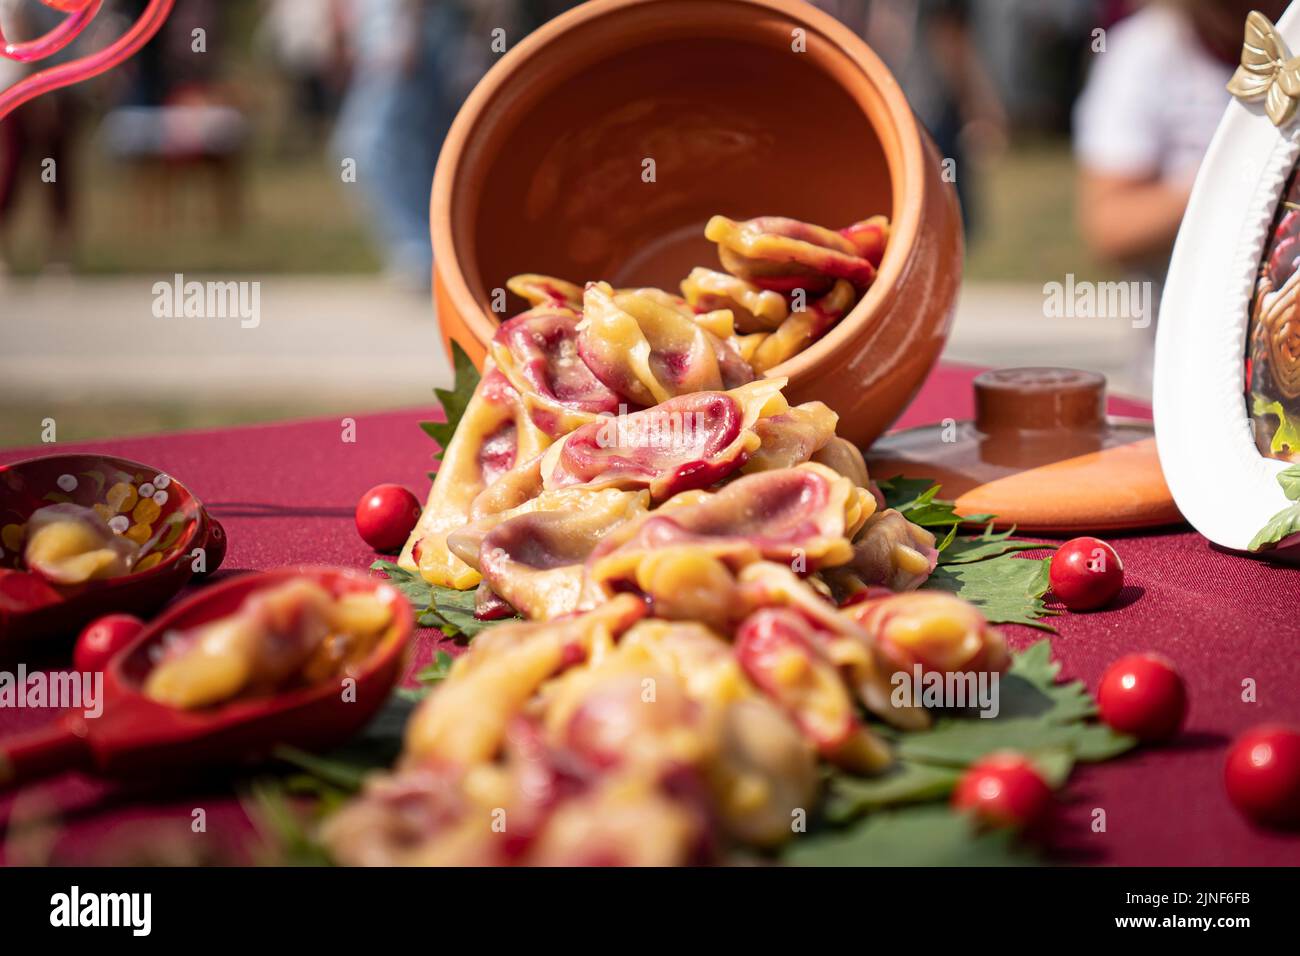 Dumplings, filled with cherries, berries. Pierogi, varenyky, vareniki pyrohy - dumplings with filling popular dish Stock Photo